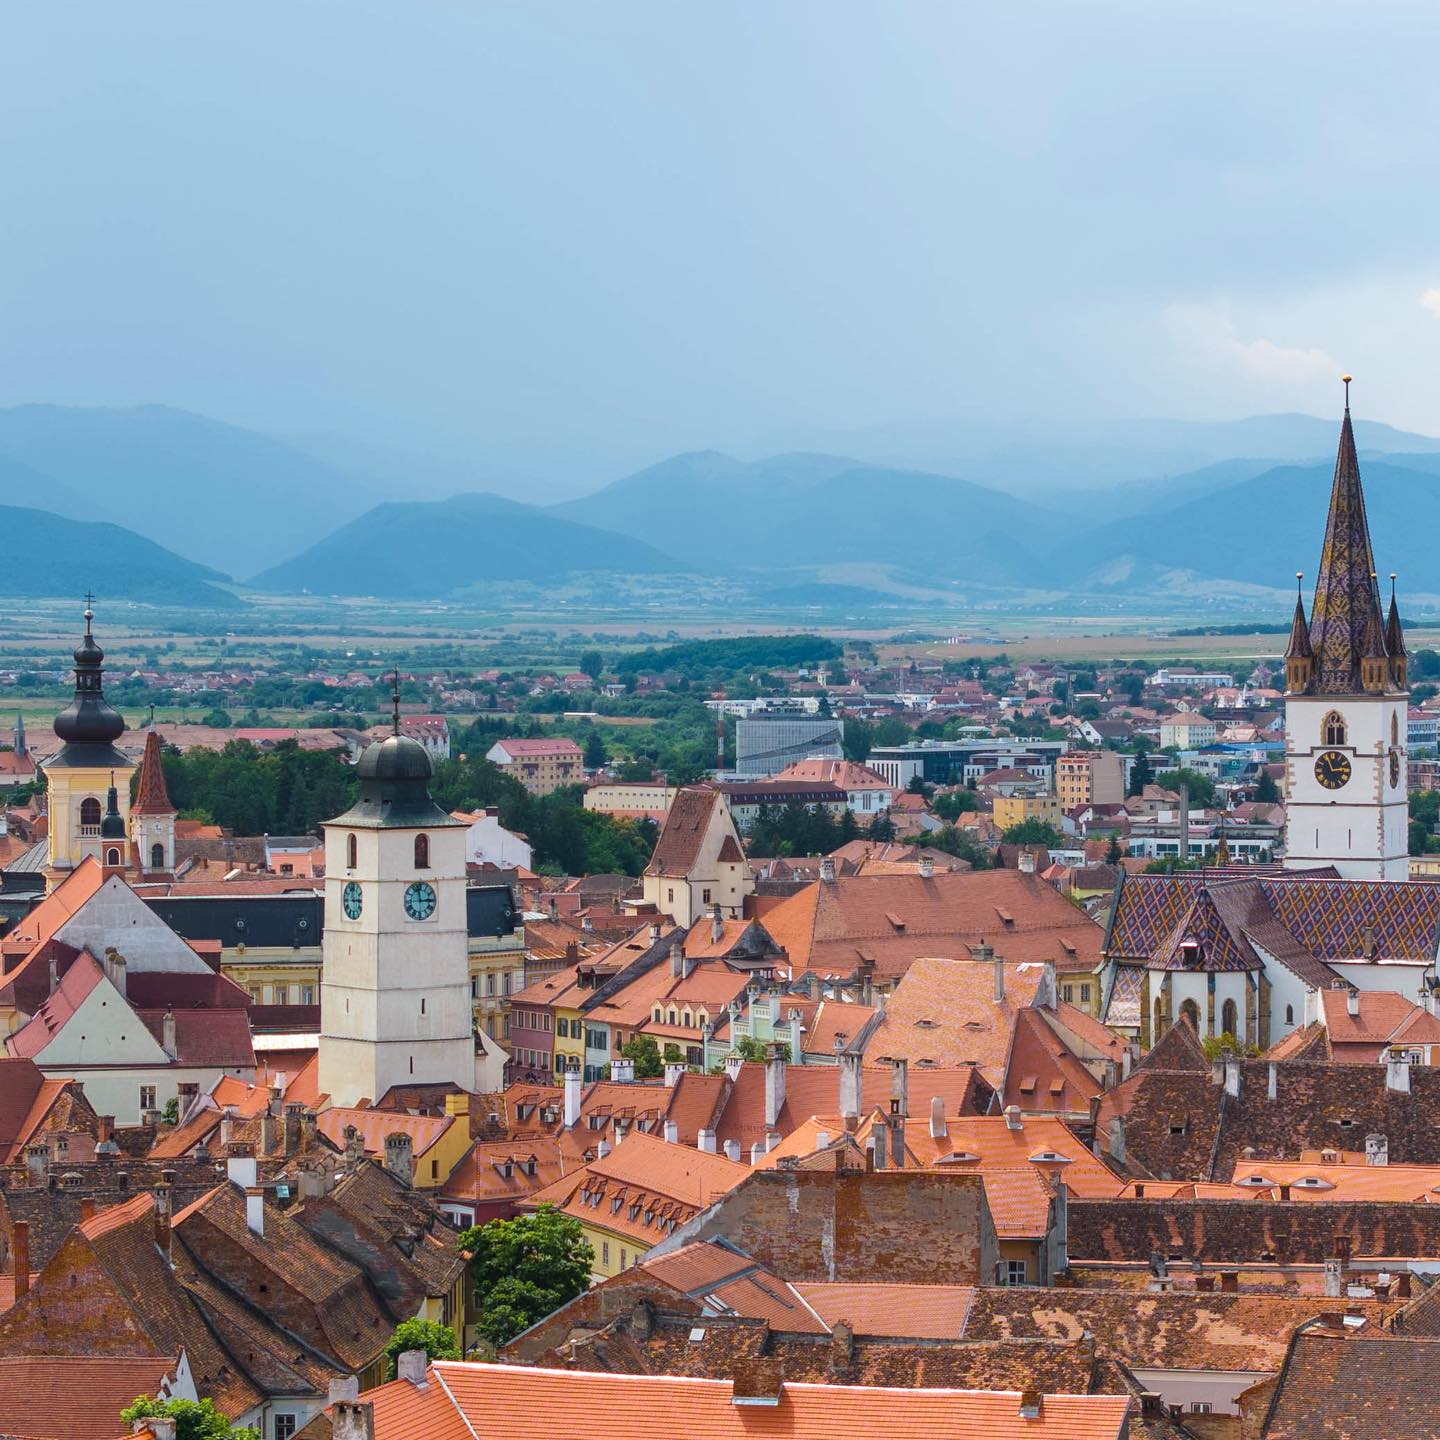 Above the beautiful historic center of Sibiu